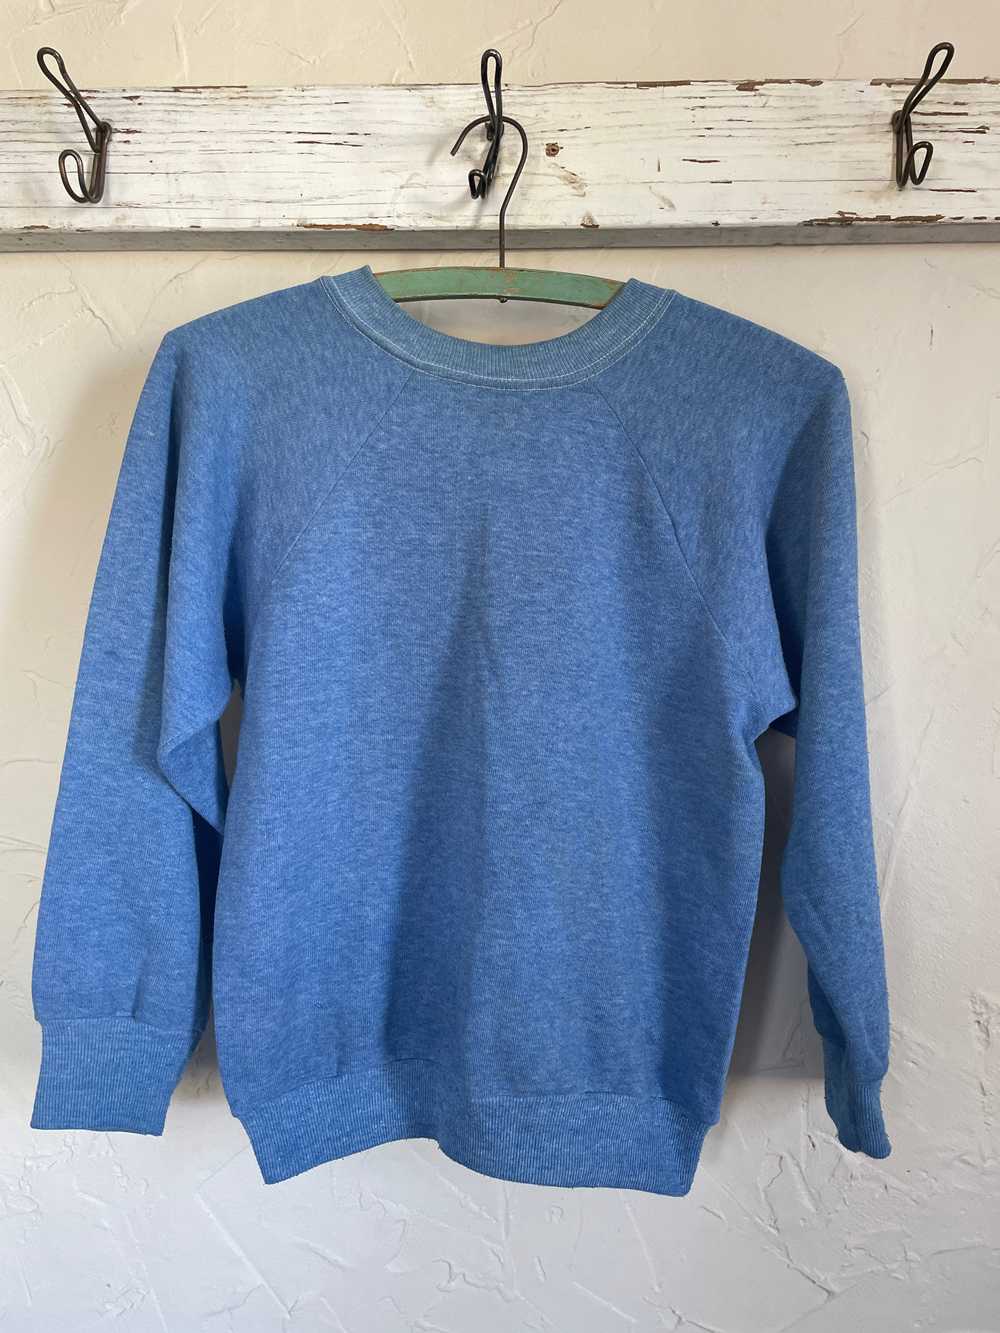 70s/80s Blank Blue Sweatshirt - image 2